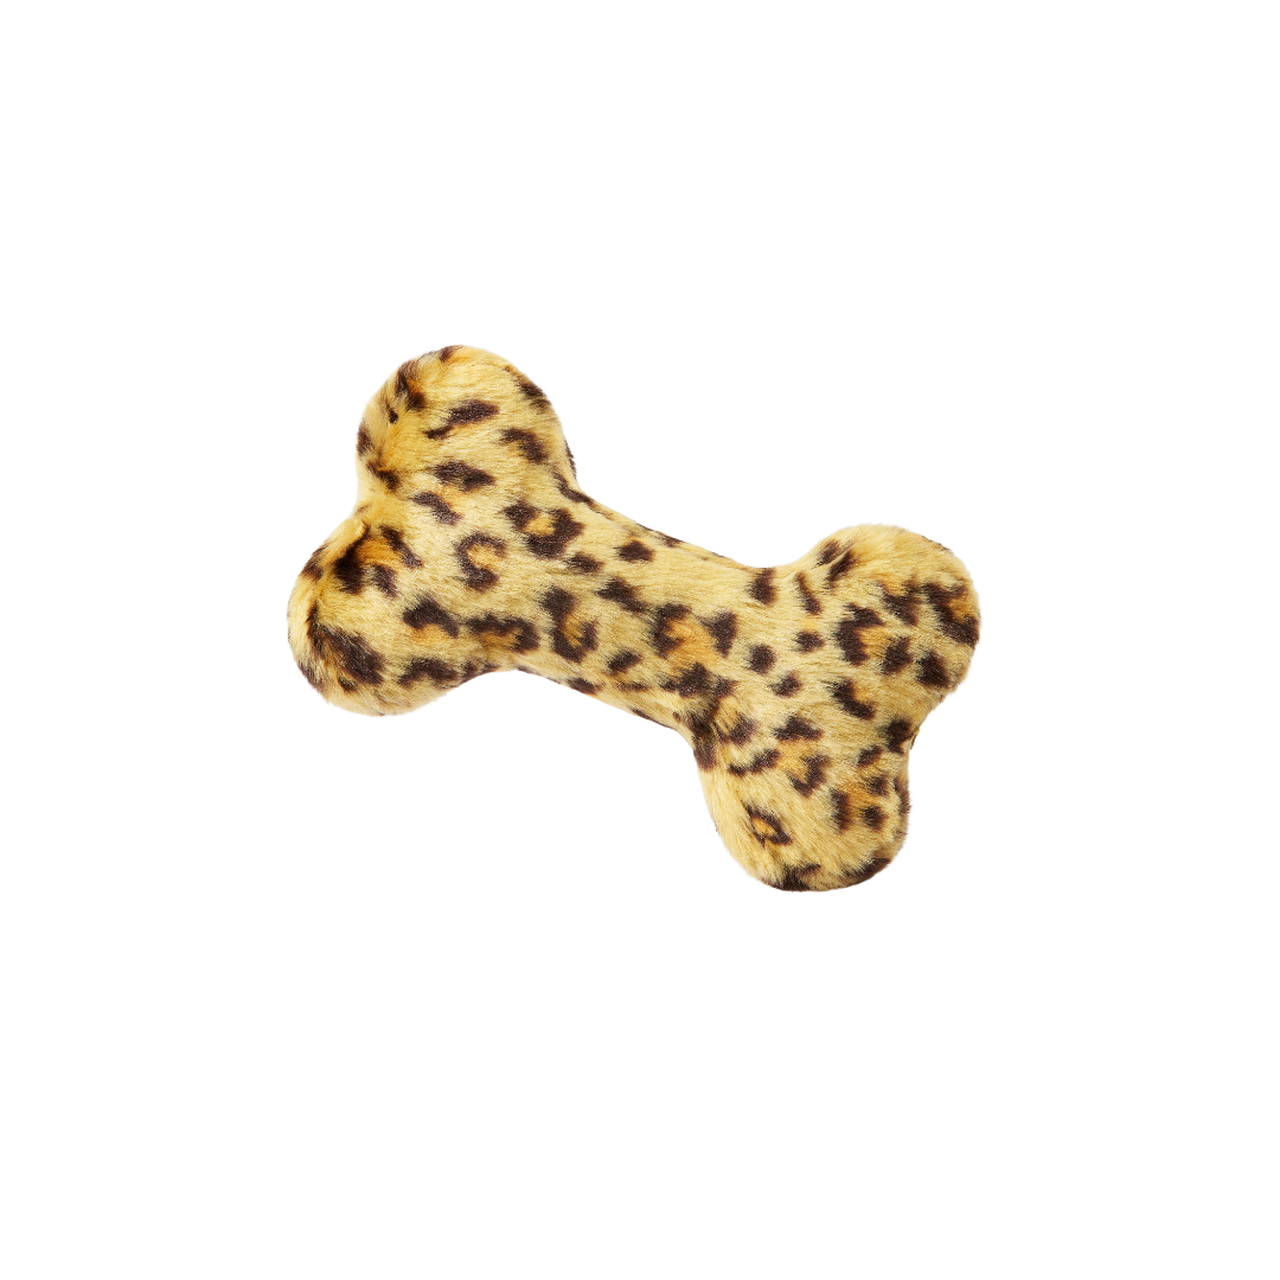 Leopard Bone - Small